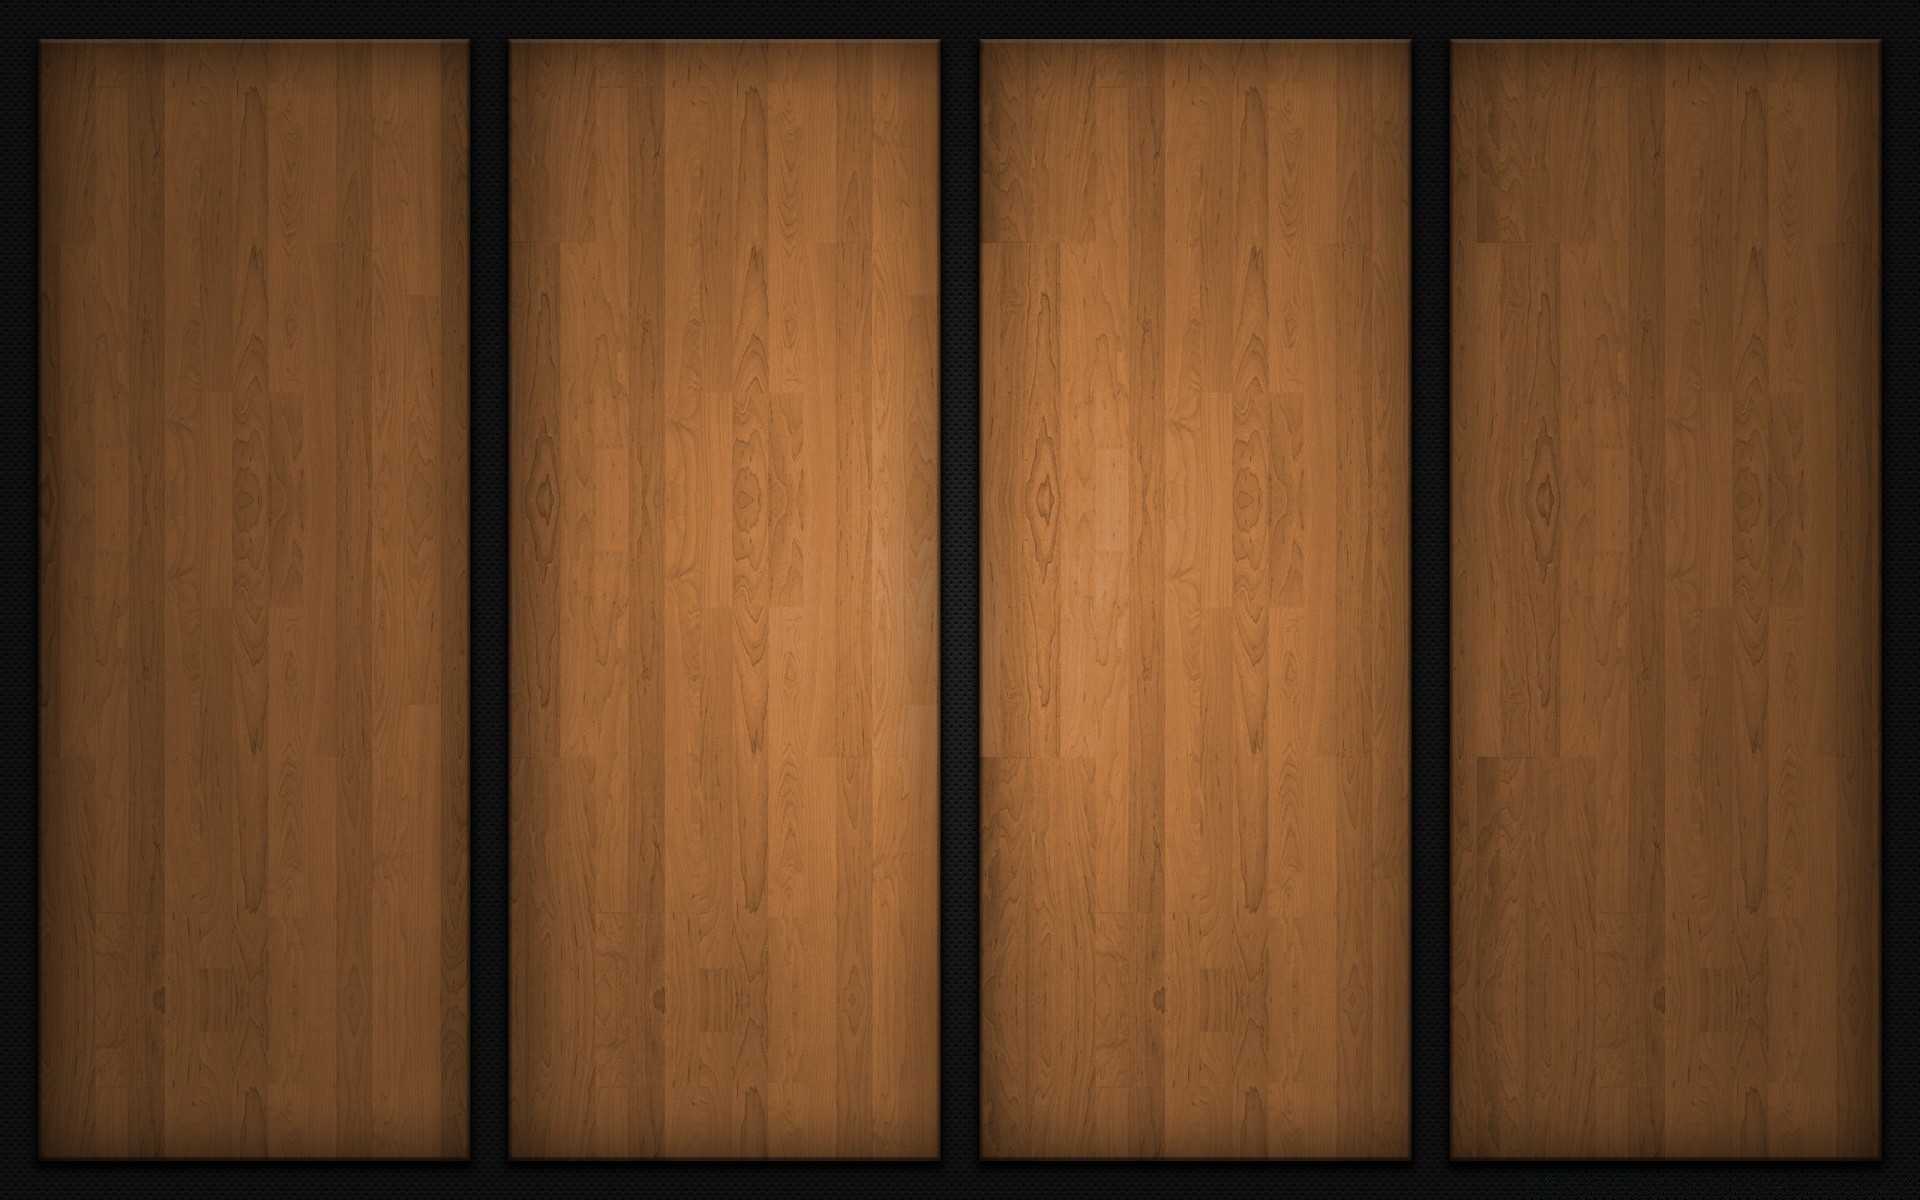 creative wood board wooden log hardwood wall fabric carpentry panel grain surface vintage old floor texture pine desktop oak parquet retro